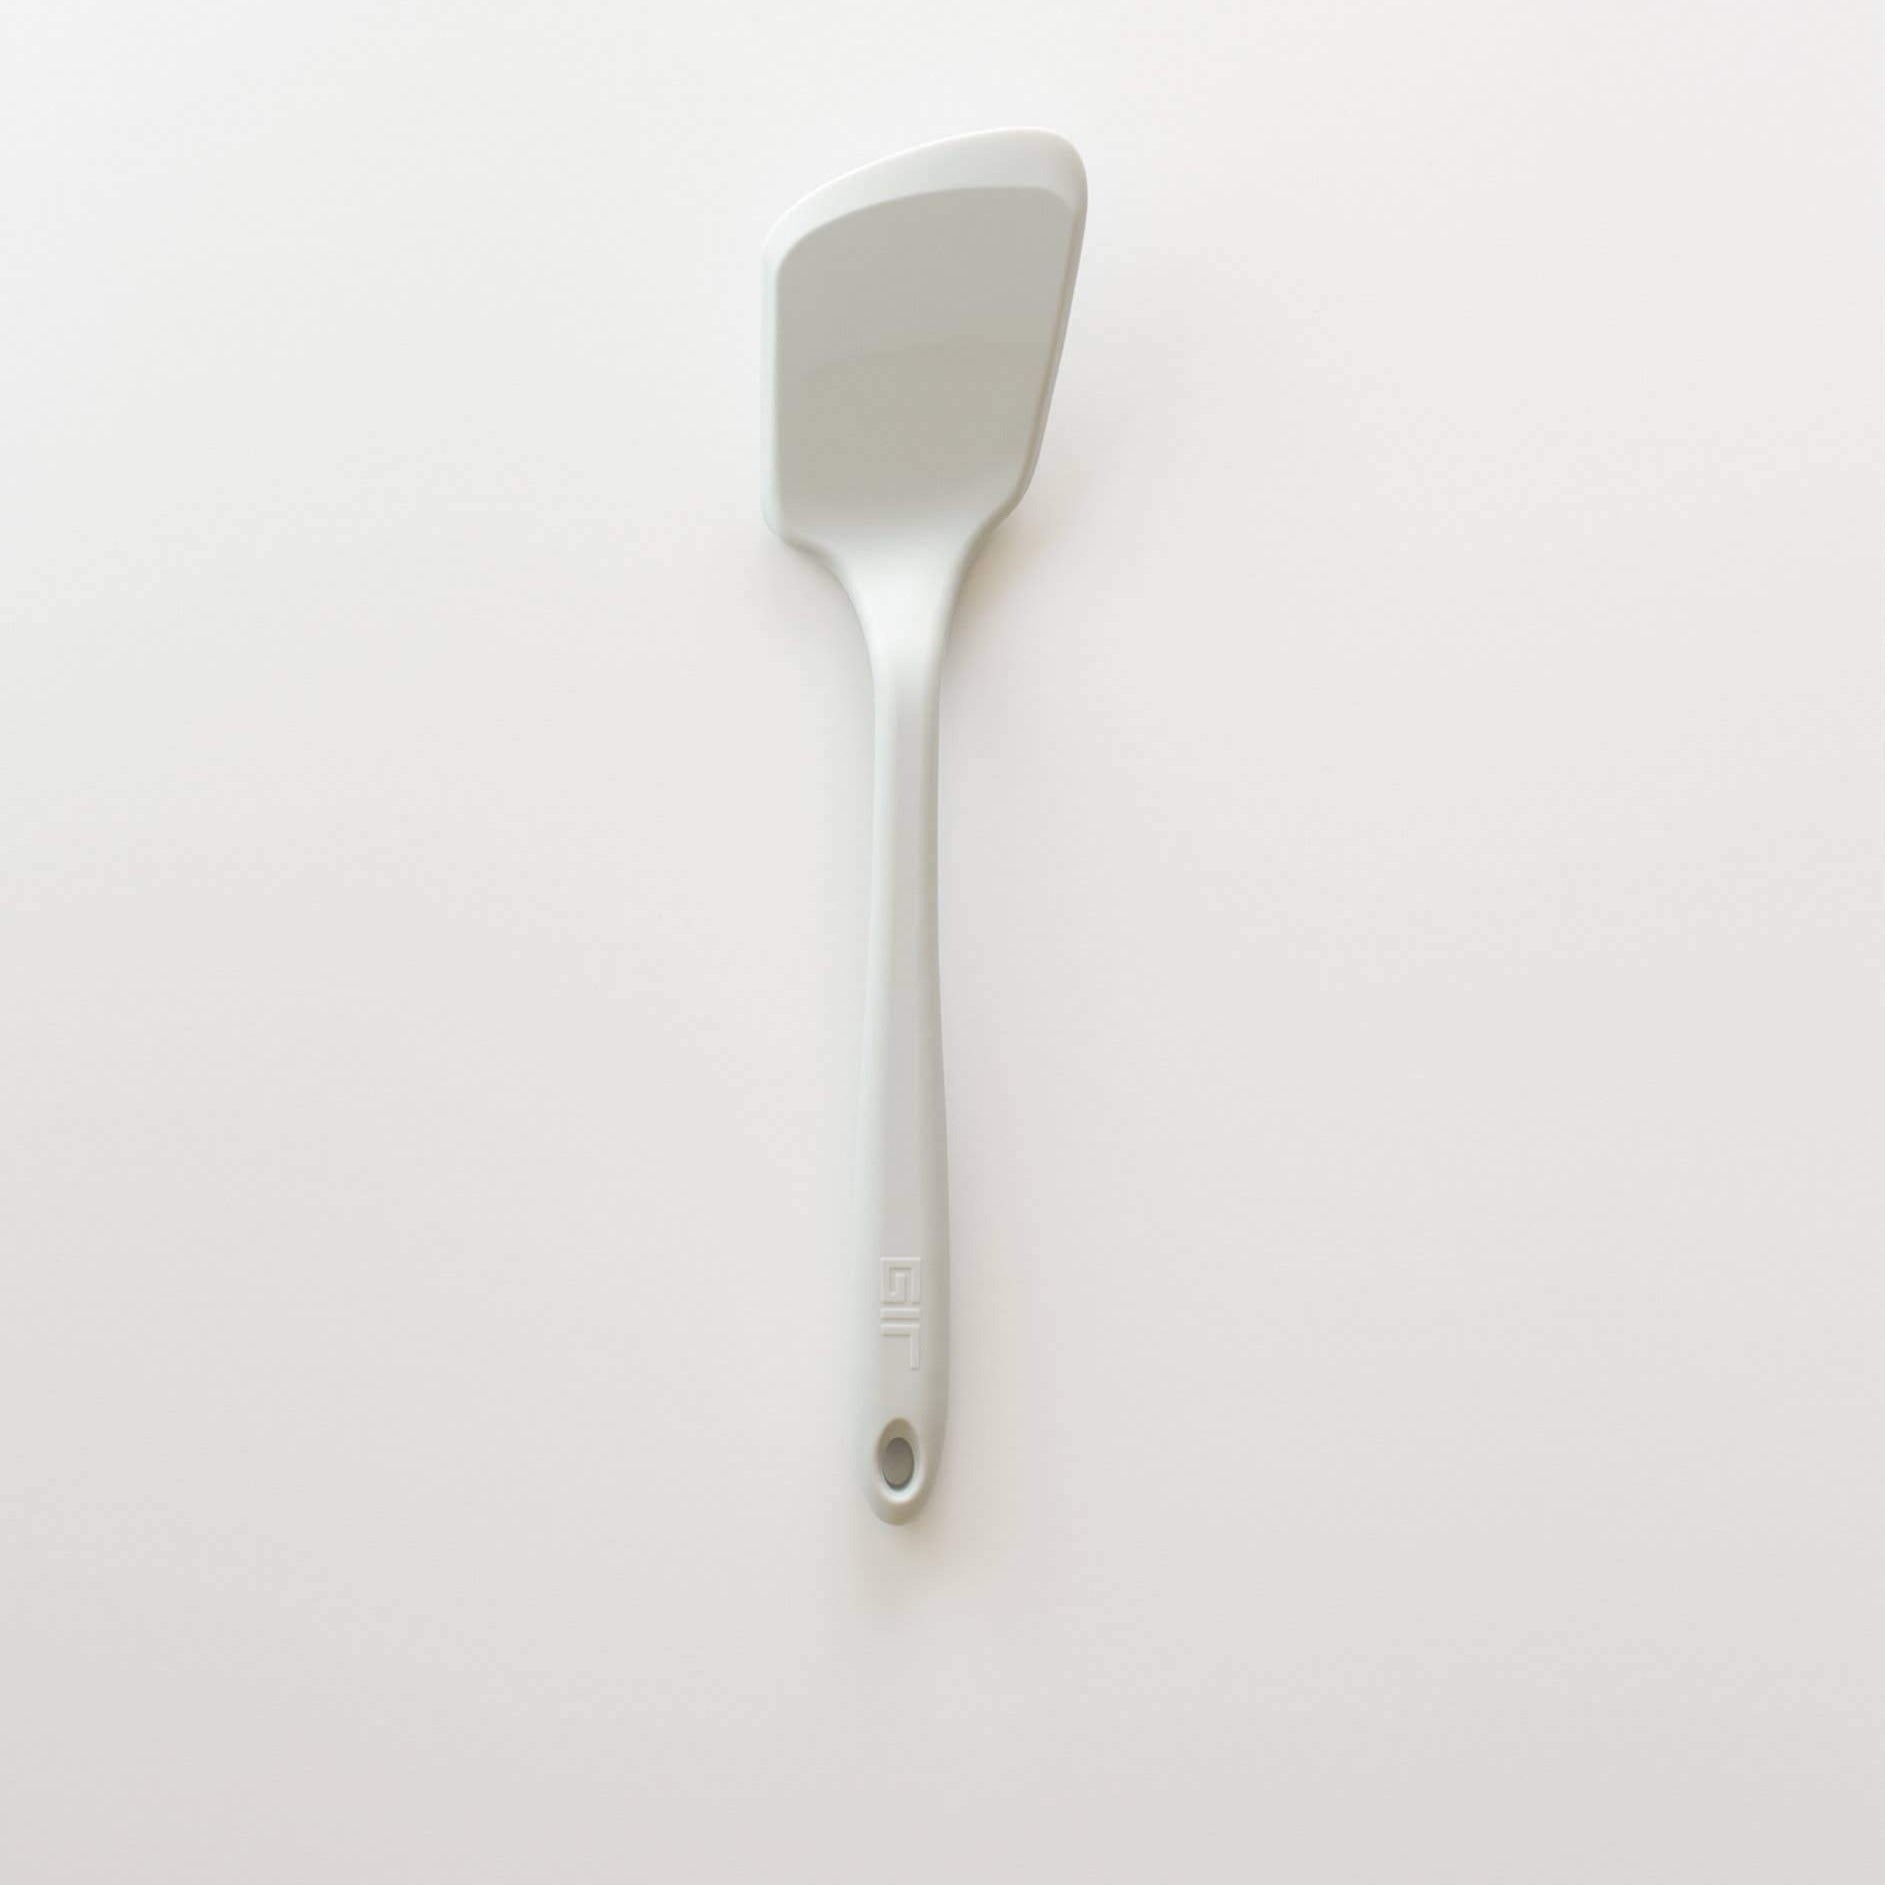 GIR All Silicone Mini Spoonula - Teal - Spoons N Spice